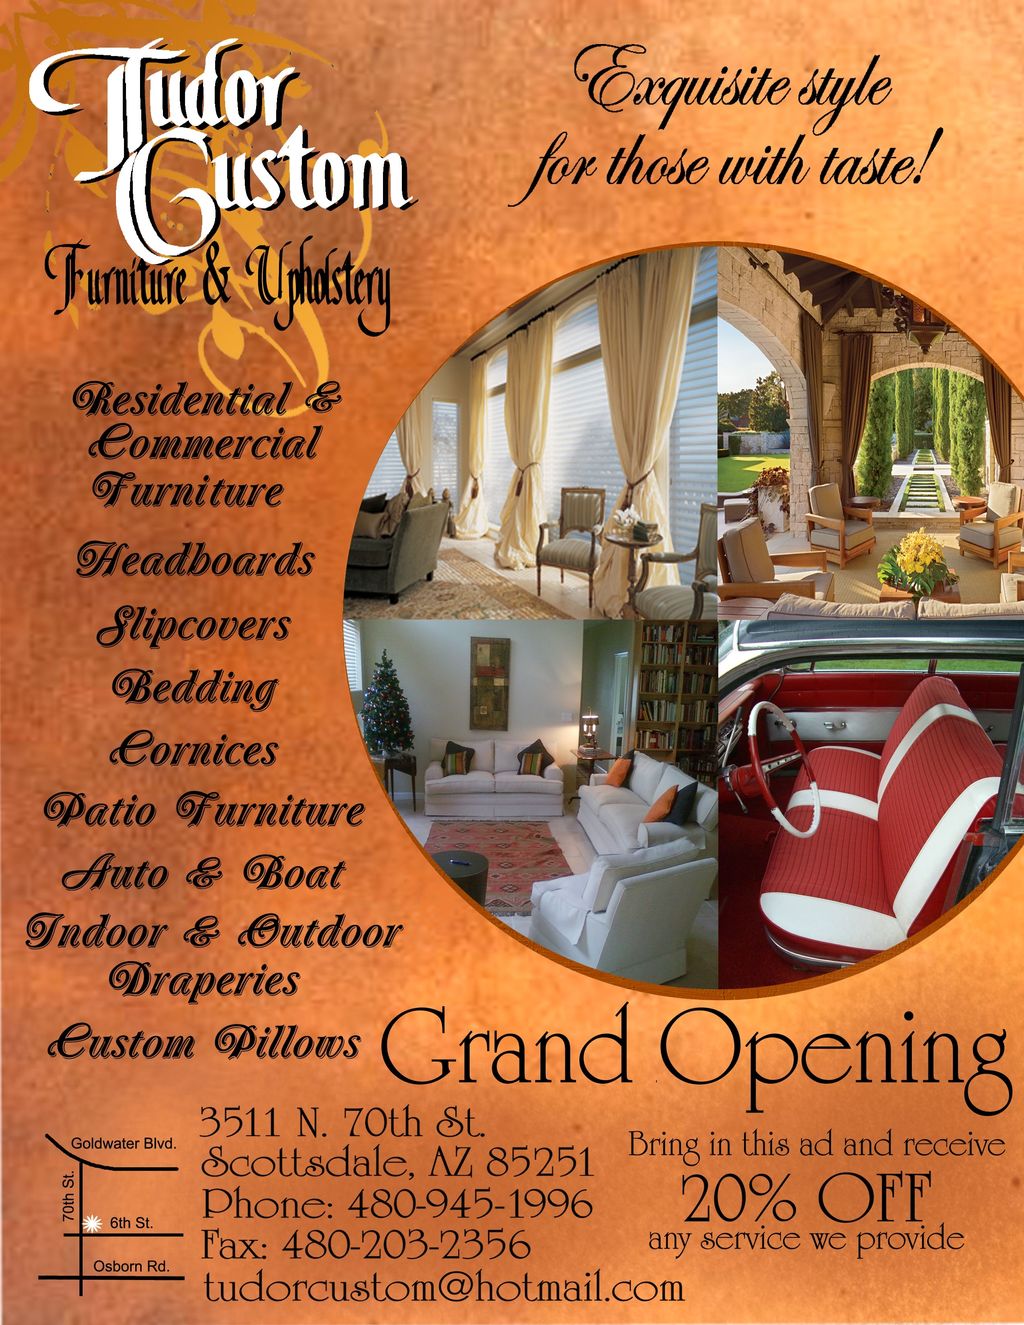 Tudor Custom Furniture & Upholstery, LLC